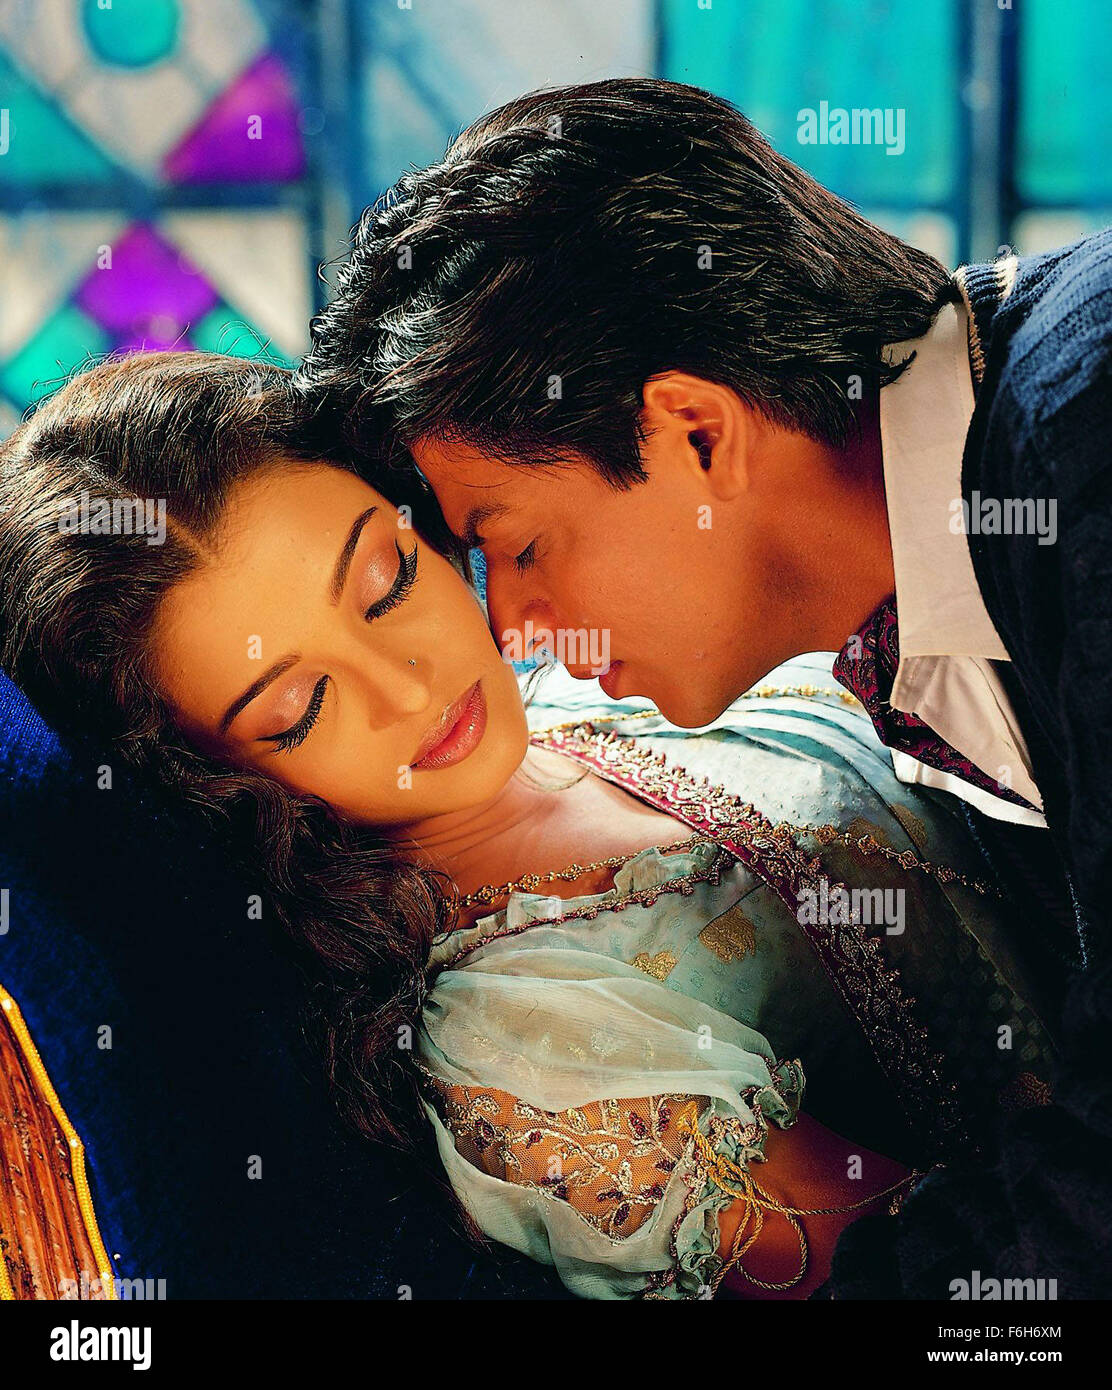 Download Shahrukh Khan HD With Deepika Padukone Wallpaper | Wallpapers.com